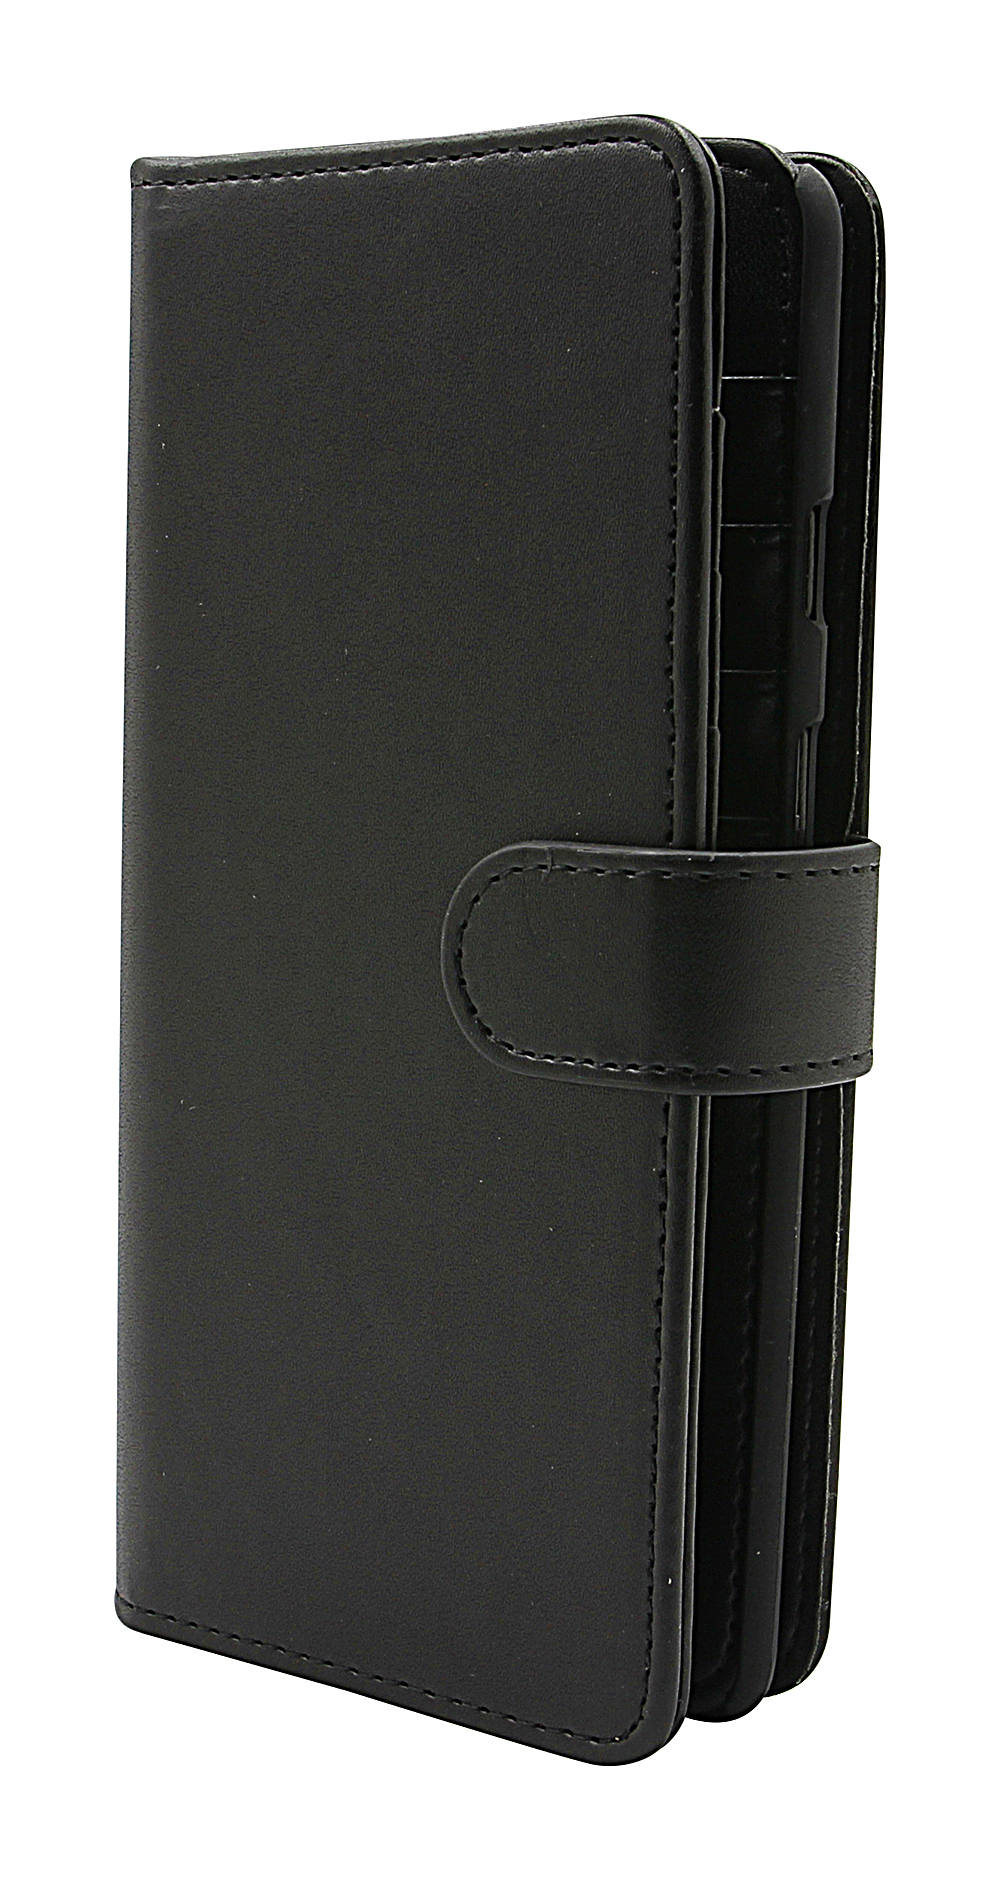 CoverIn Skimblocker XL Magnet Wallet OnePlus 7T